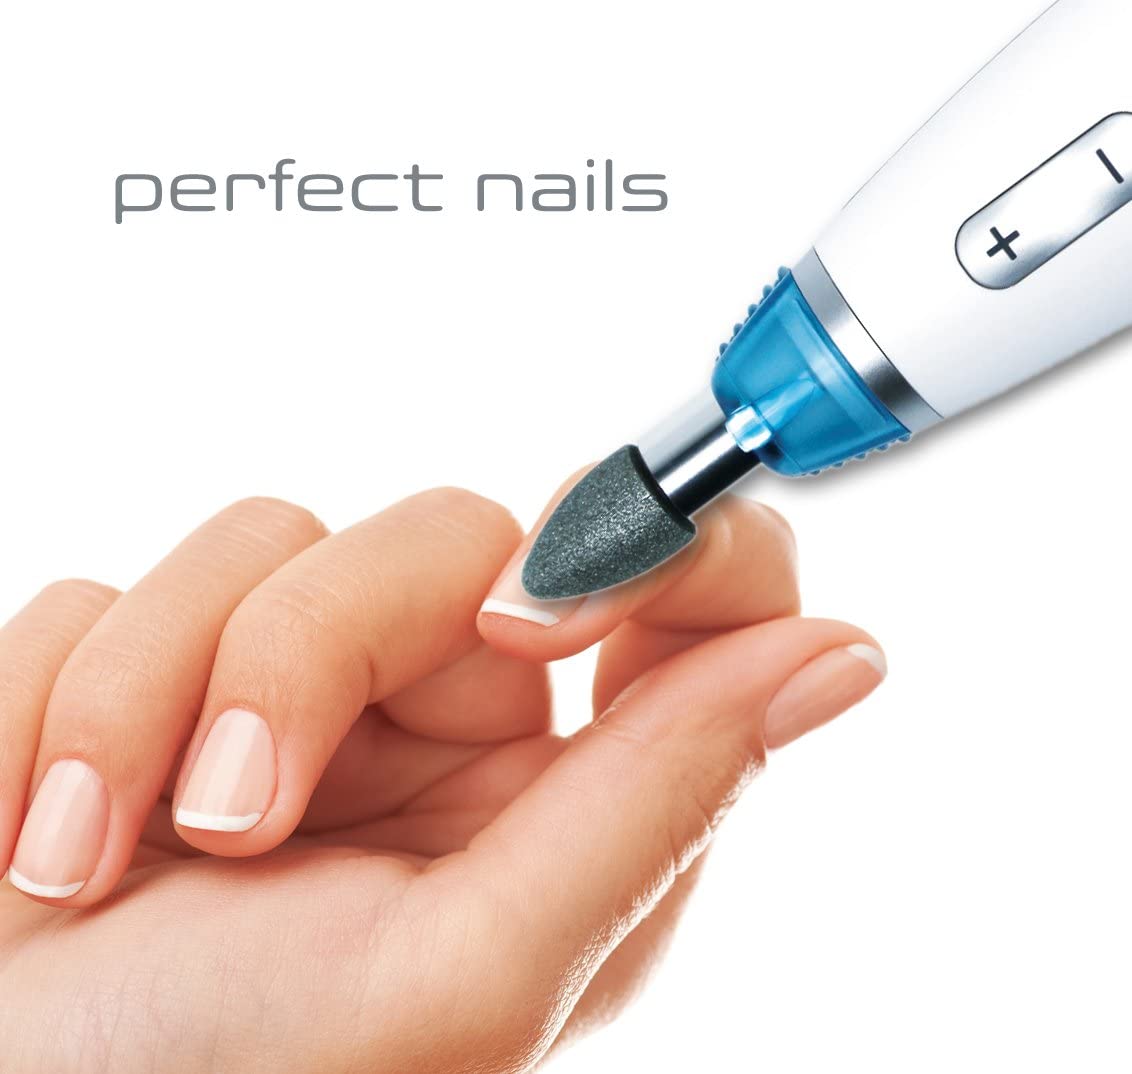 prorelax Perfect Manicure Pedicure Set Women Men Toenails Fingernails Hand Care Nail Care Foot Care Calluses Corns Hyperkeratosis Care Shaper Diabetics